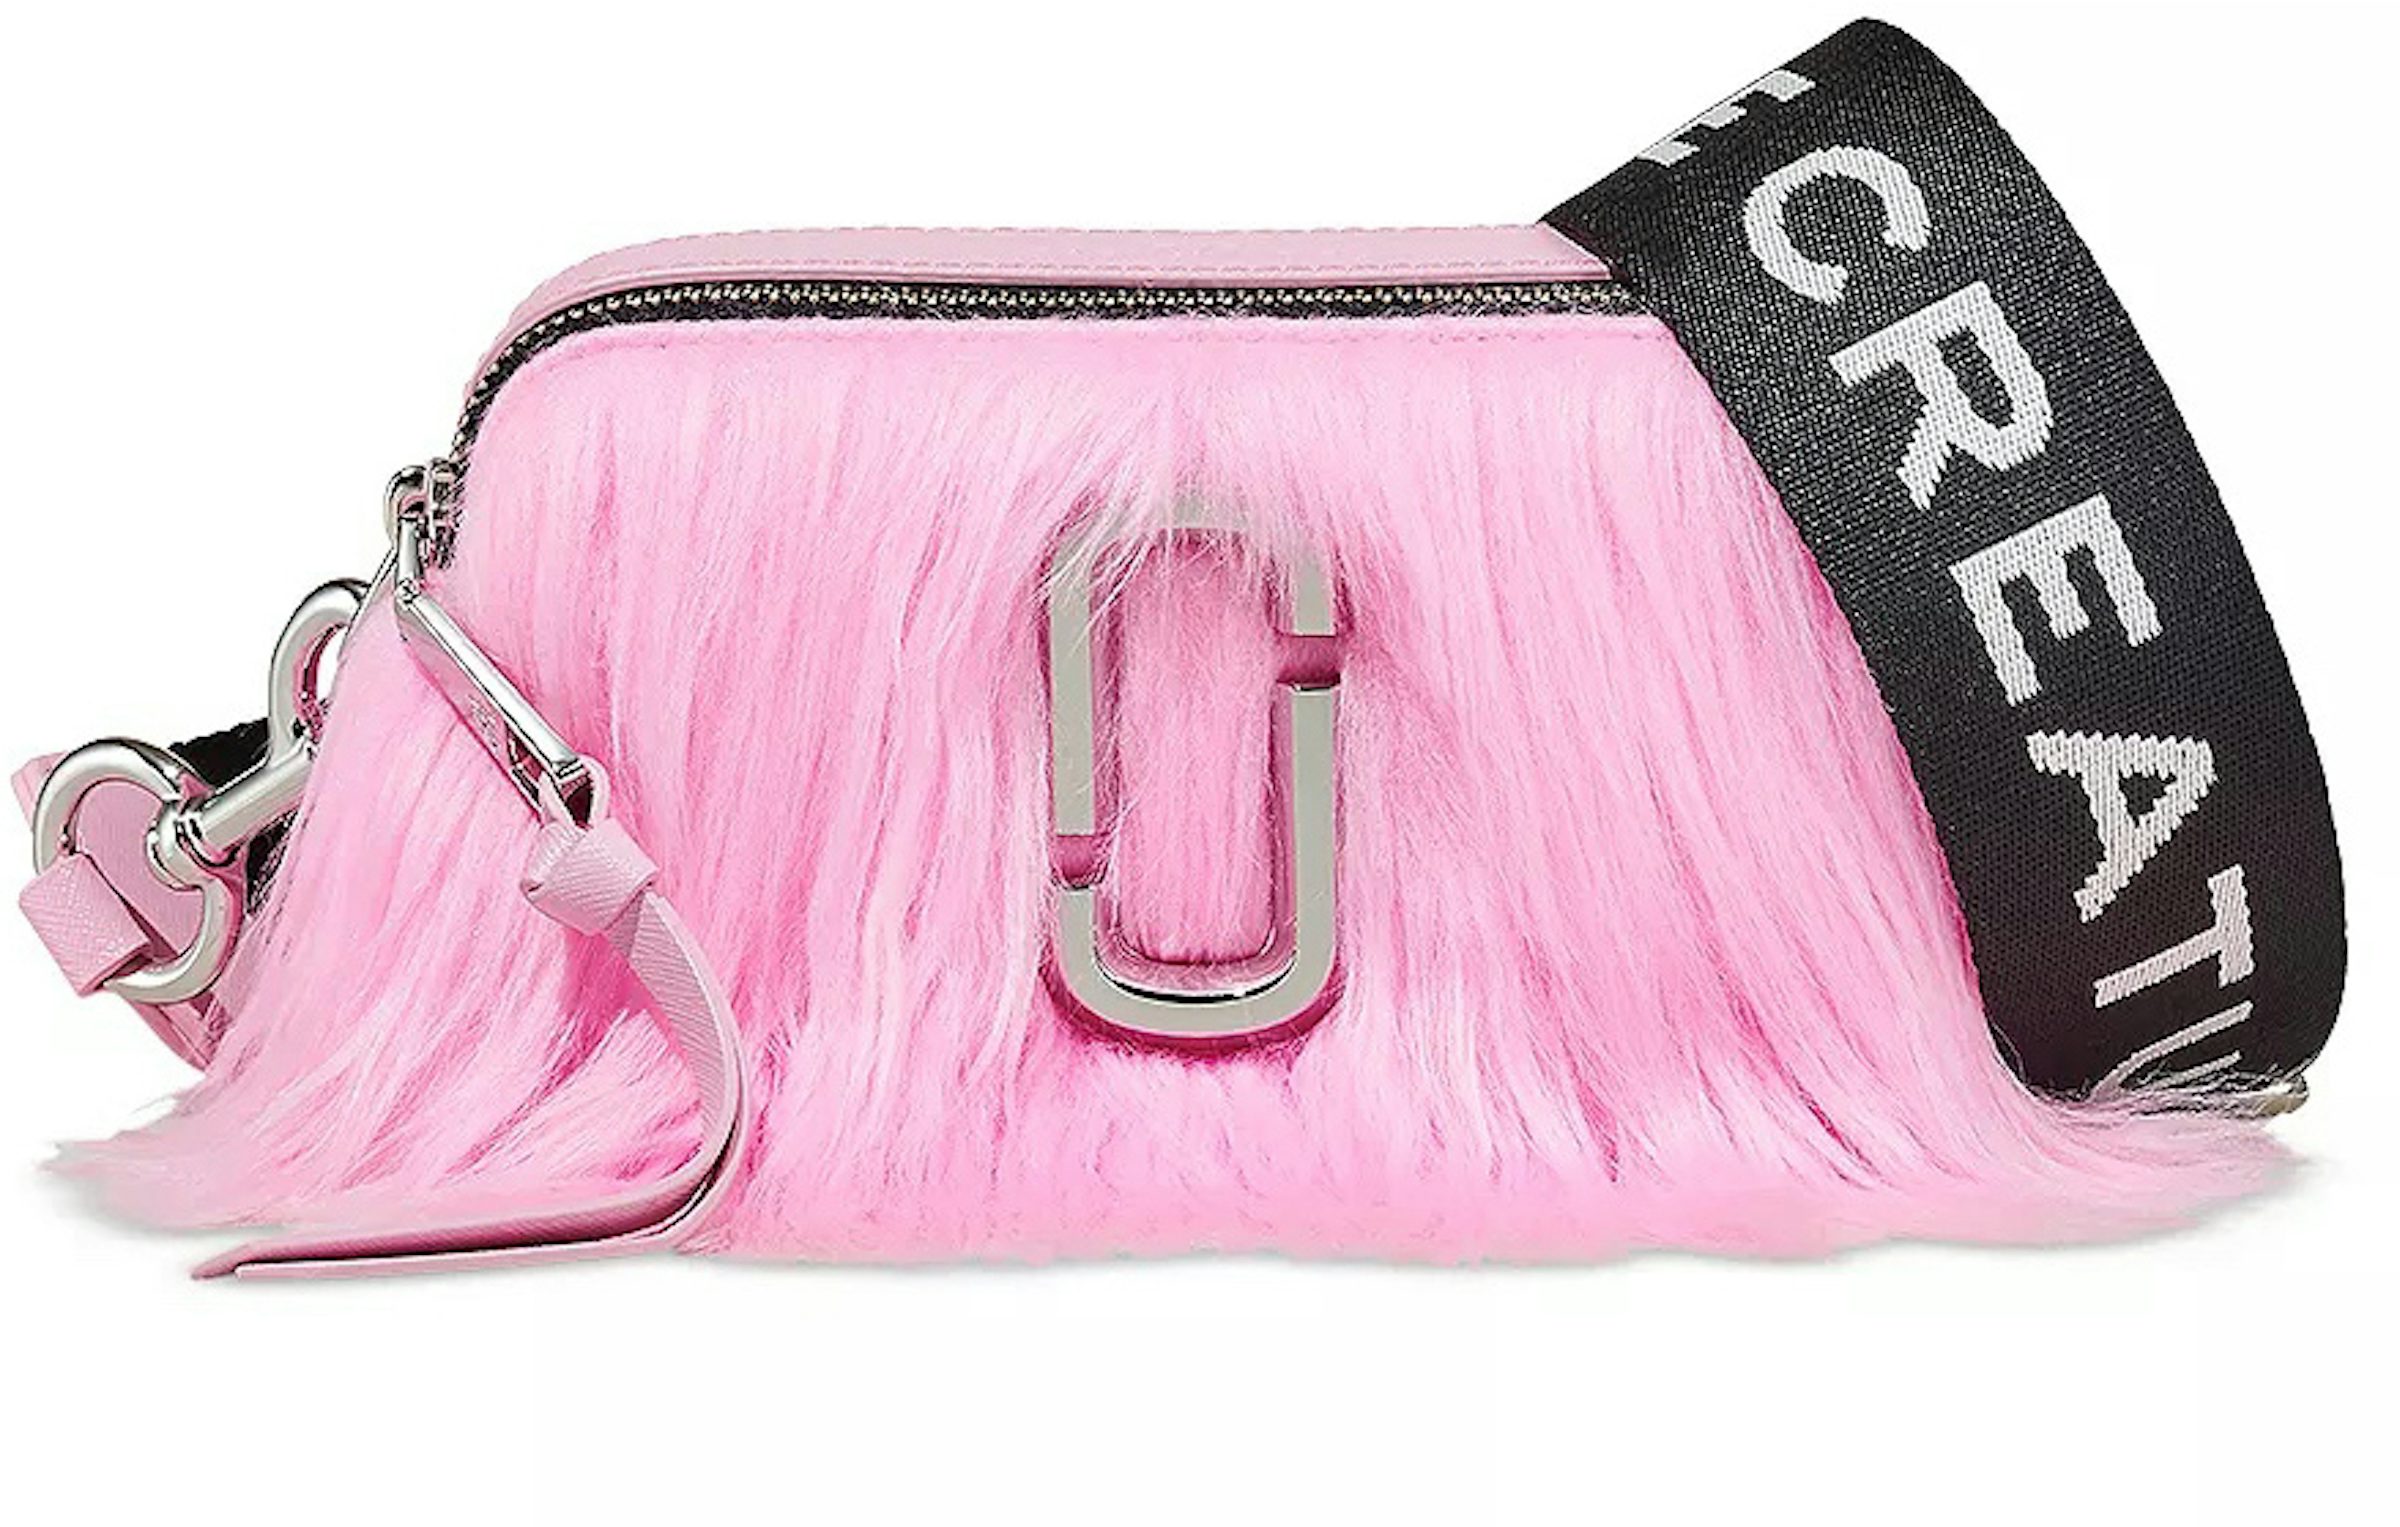 Marc Jacobs The Snapshot Camera Bag Beige/Black/Pink/Metallic in